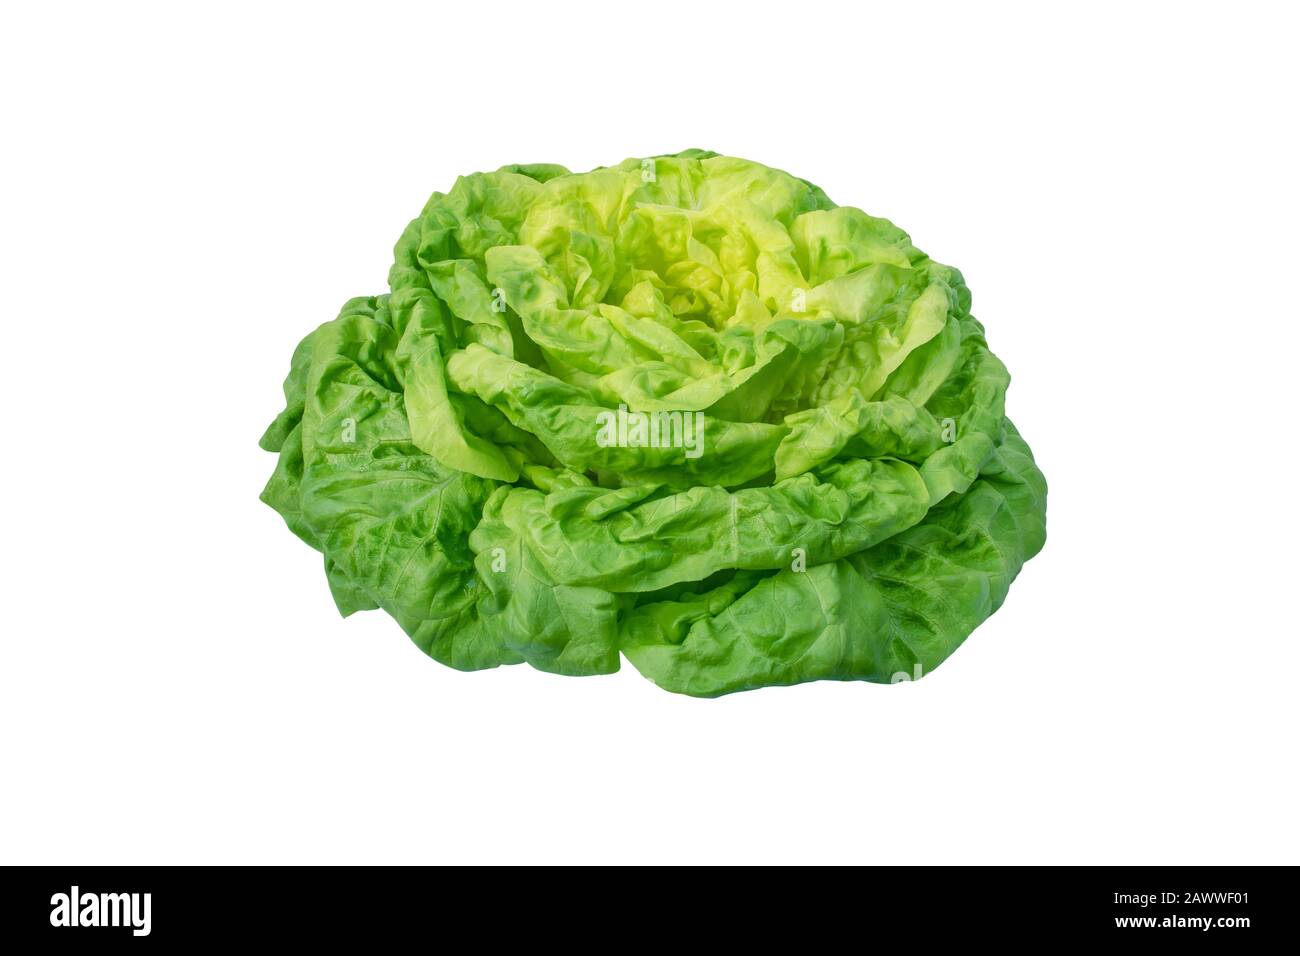 Lettuce salad head isolated on white. Butterhead variety. Trocadero cultivar. Green leafy vegetable. Stock Photo